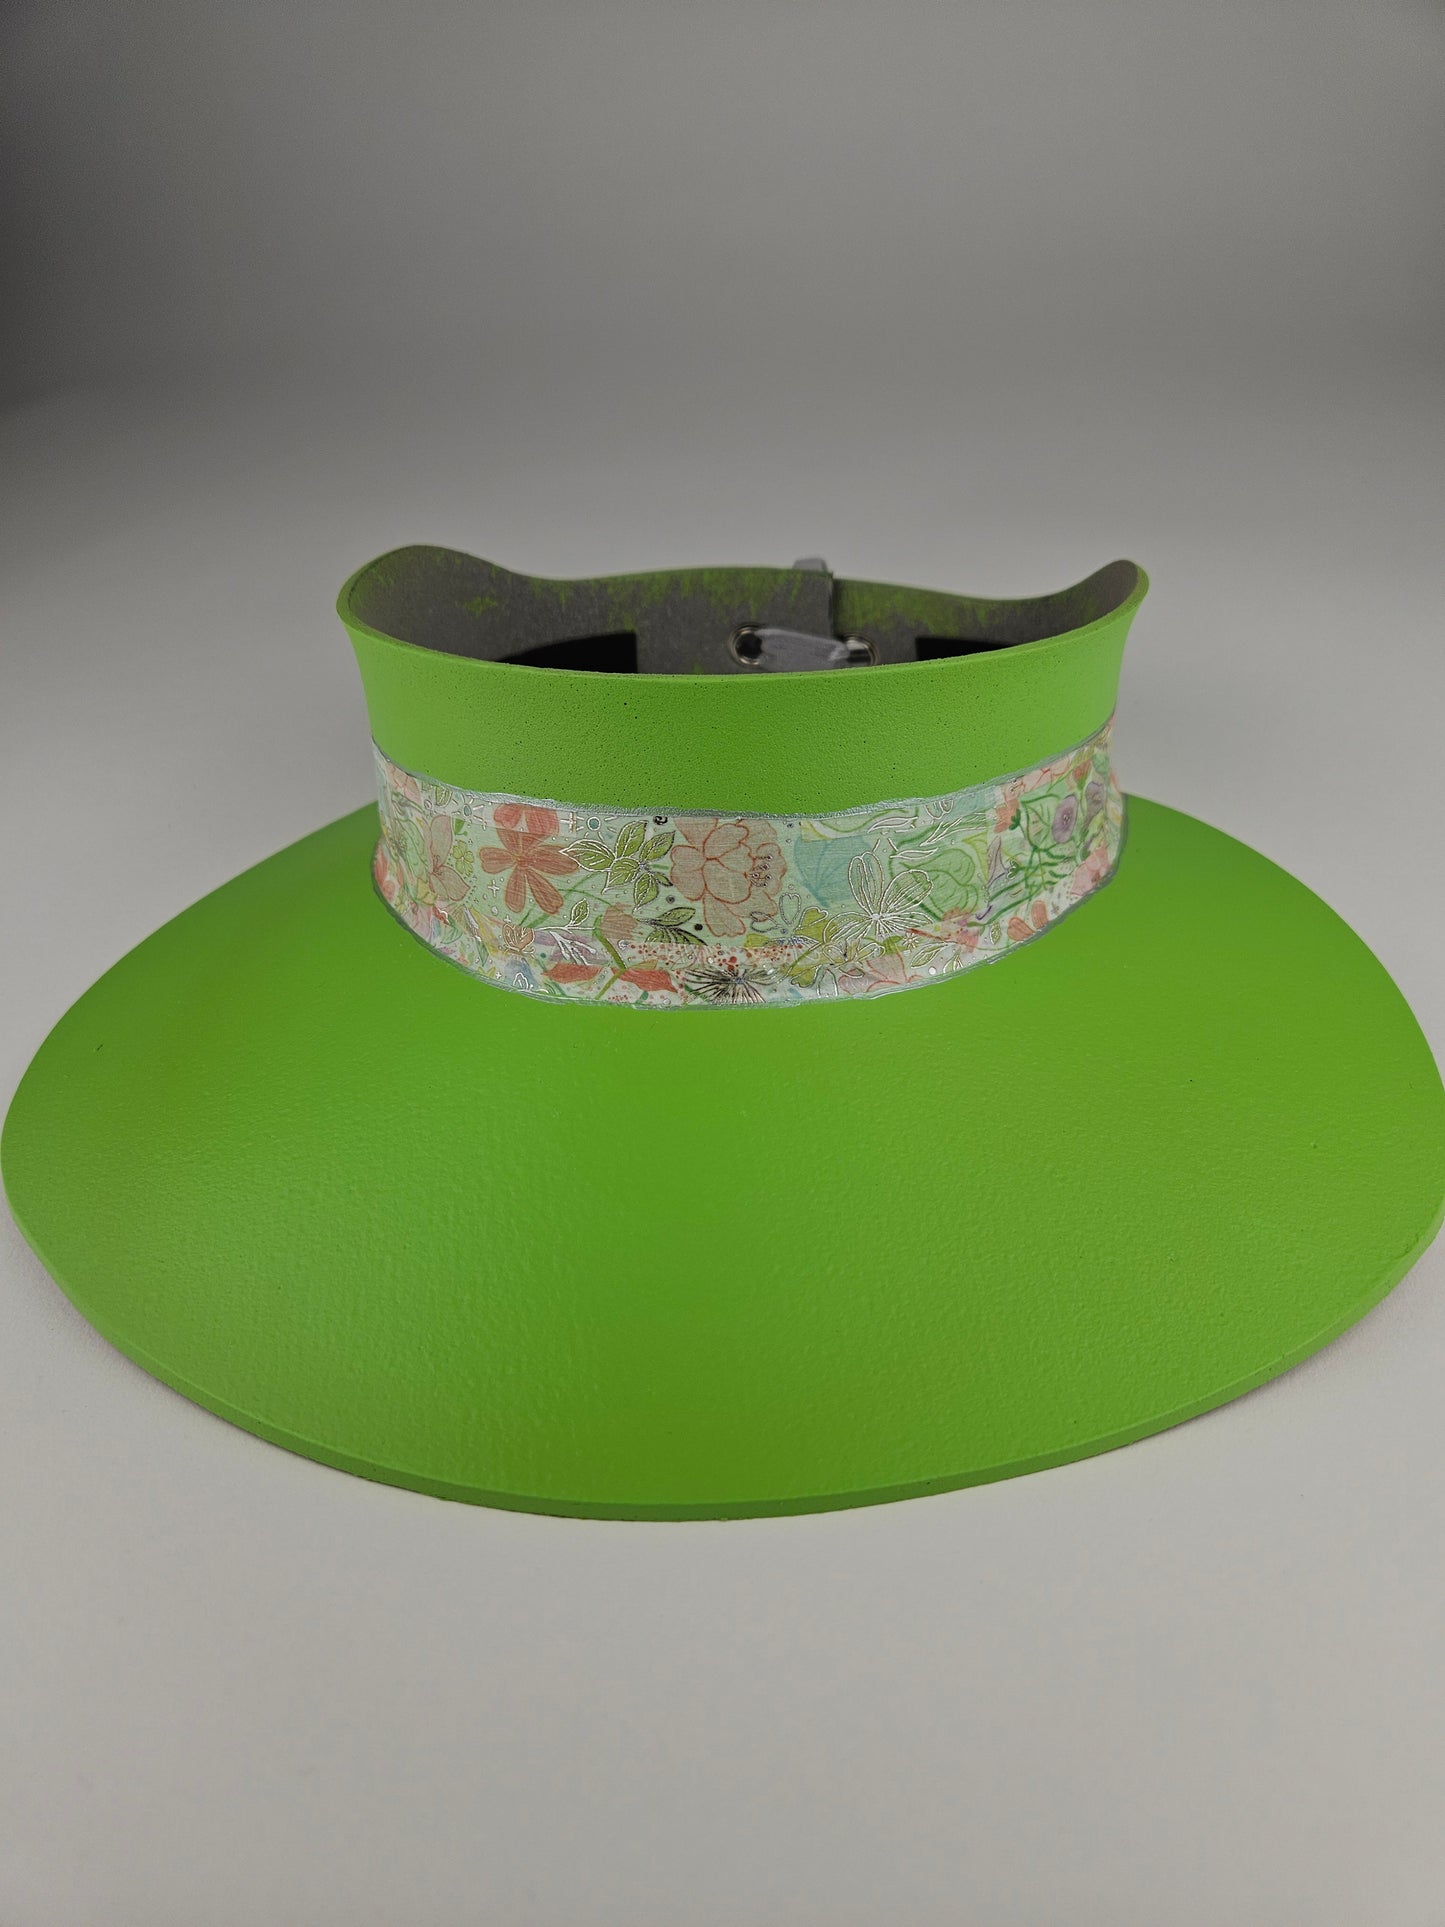 Neon Green Audrey Sun Visor Hat with Lovely Pastel Floral Band: Tea, Walks, Brunch, Asian, Golf, Summer, Church, No Headache, Pool, Beach